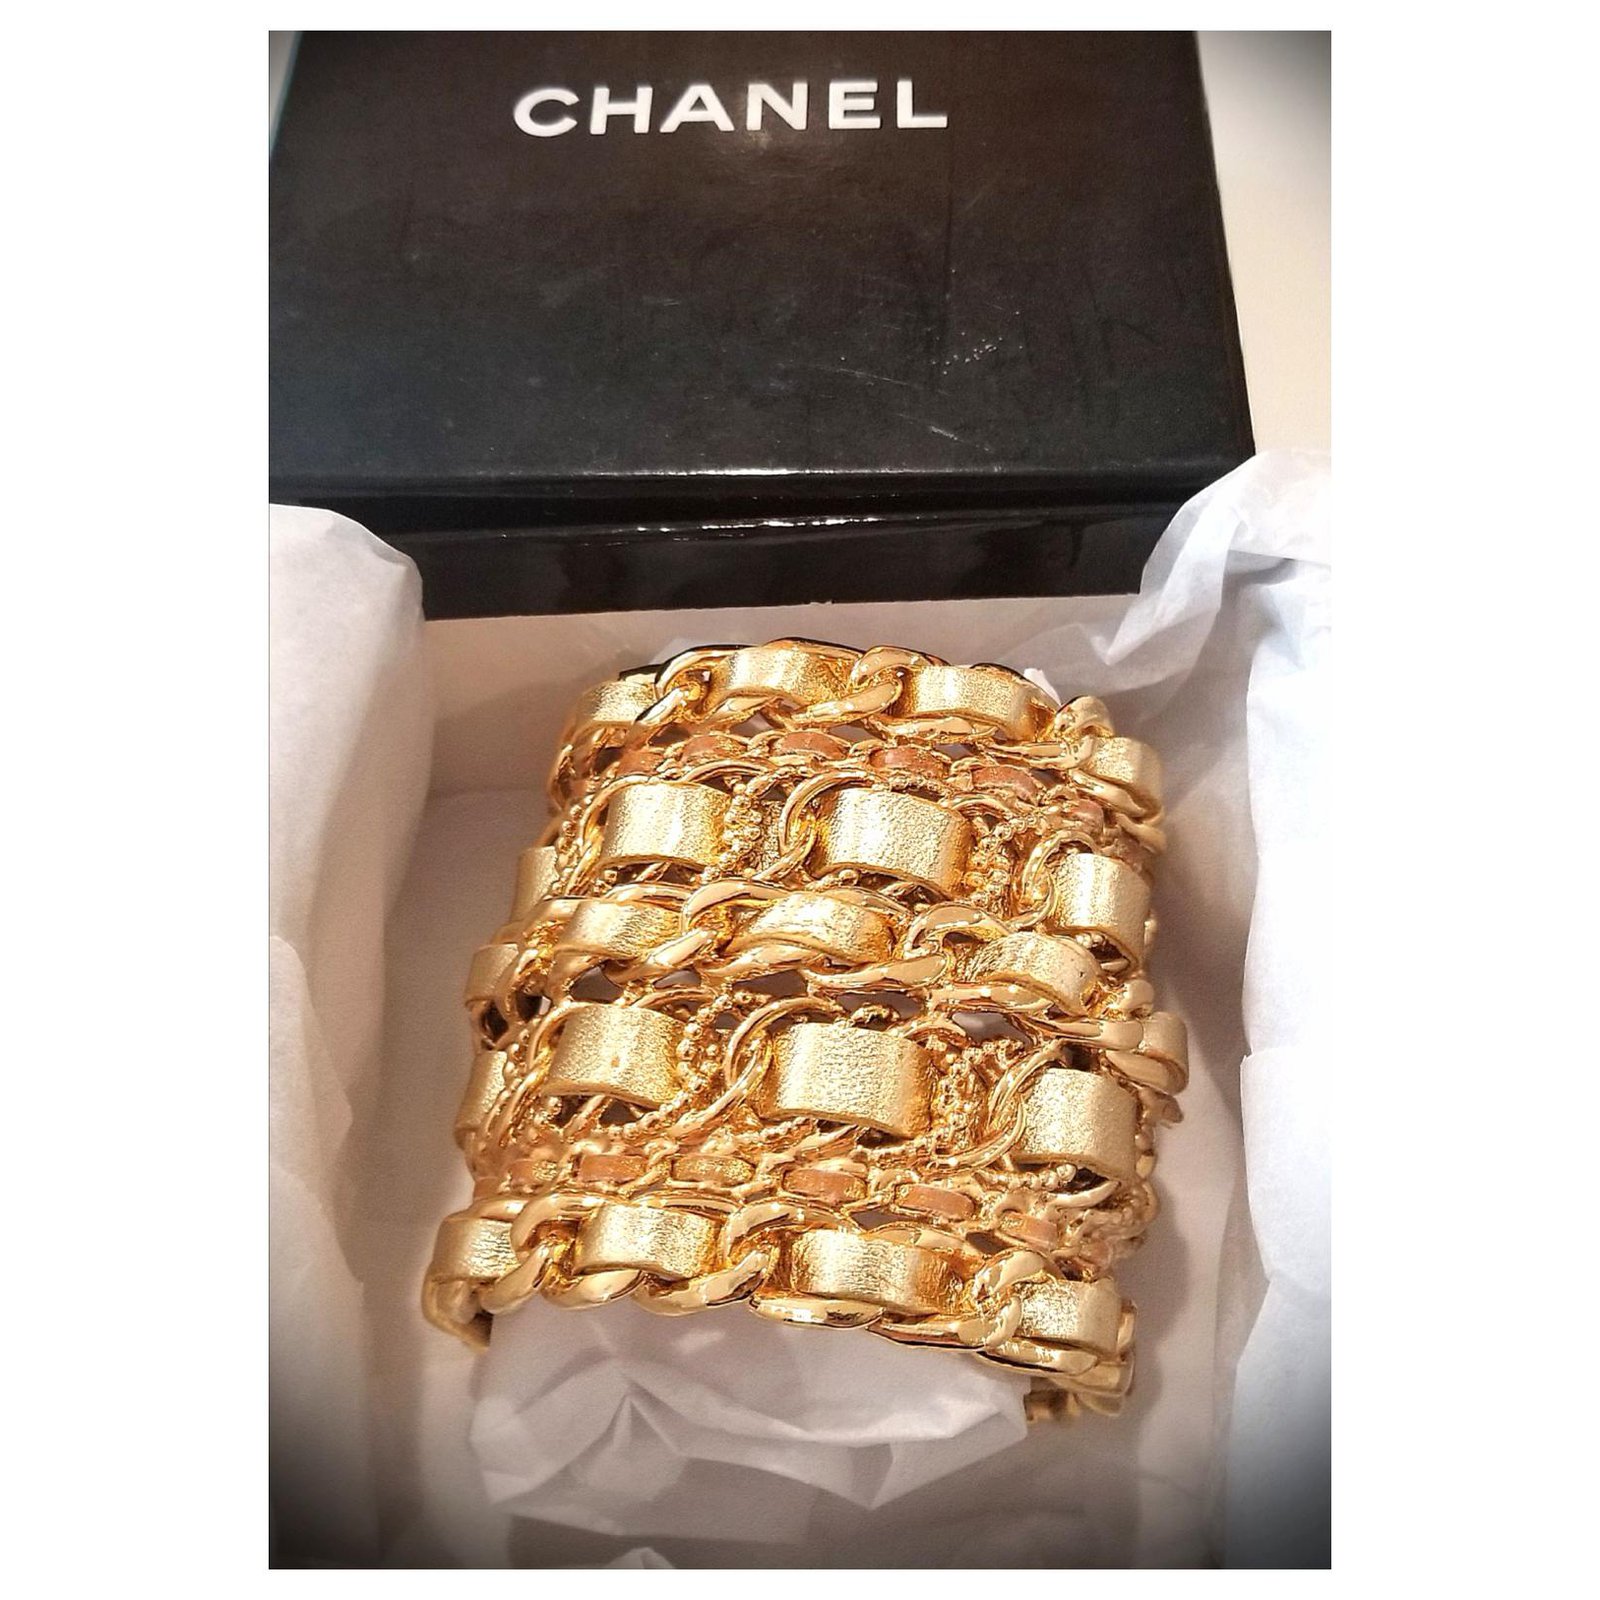 Chanel Bracelets for Sale at Auction